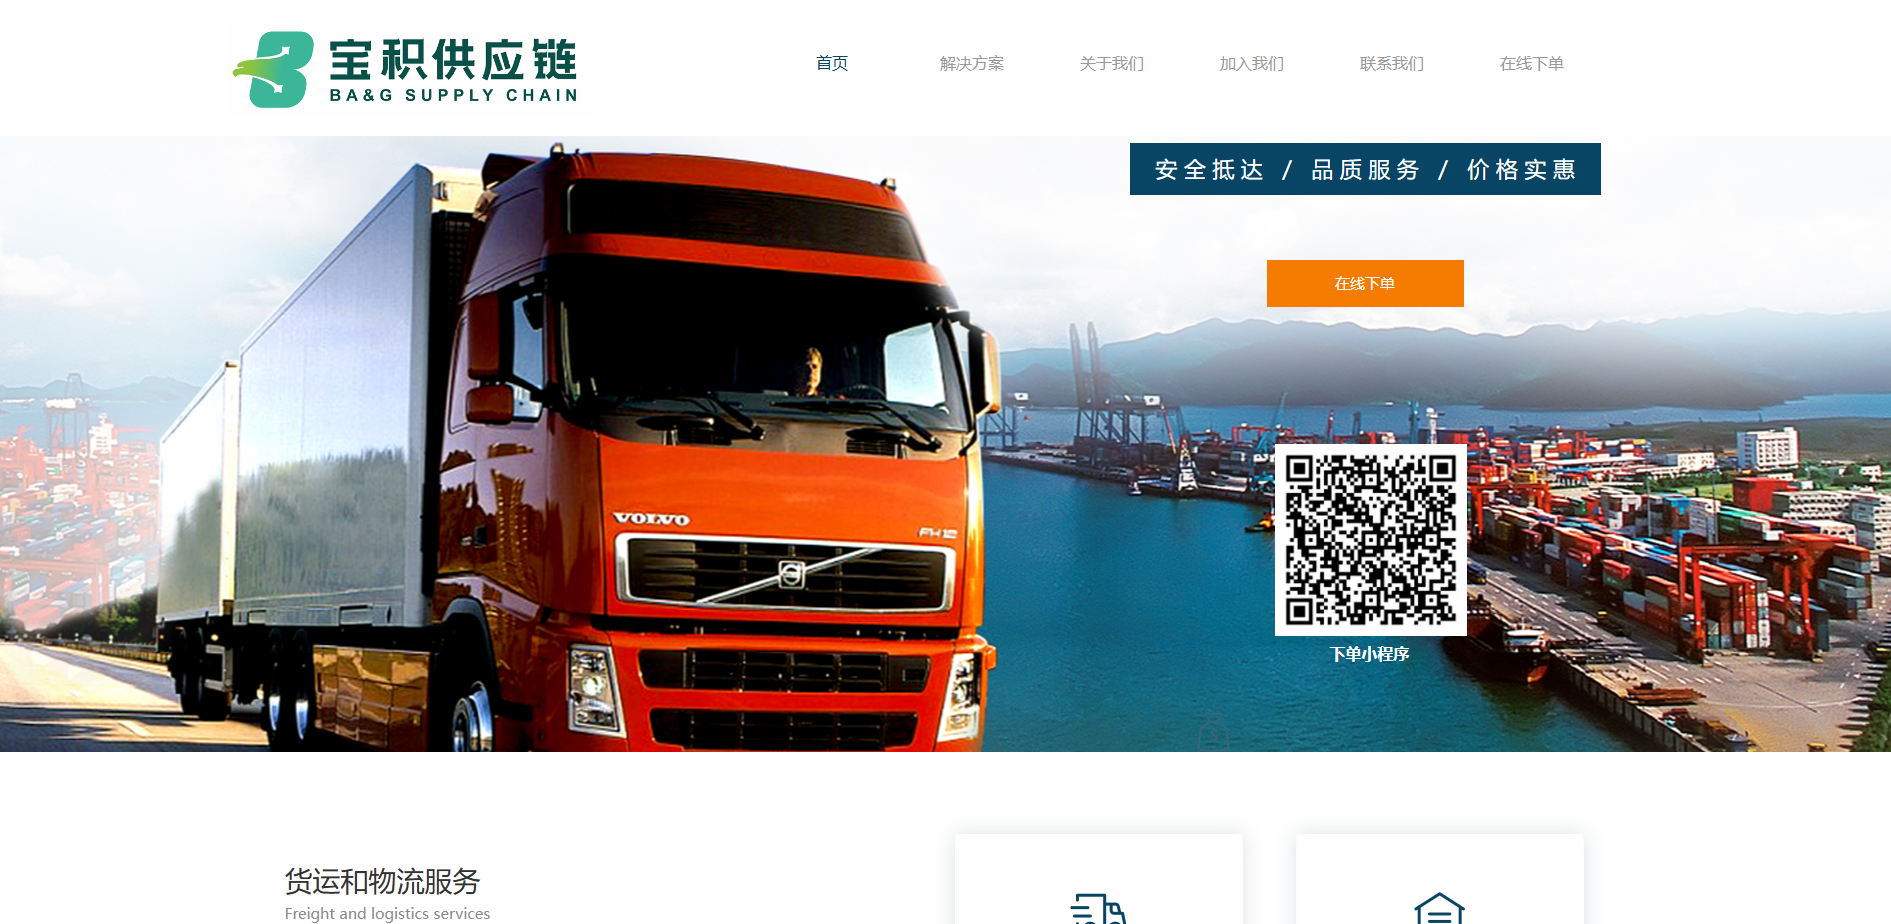  Baoji supply chain (China Southeast Asia cross-border truck transport service)